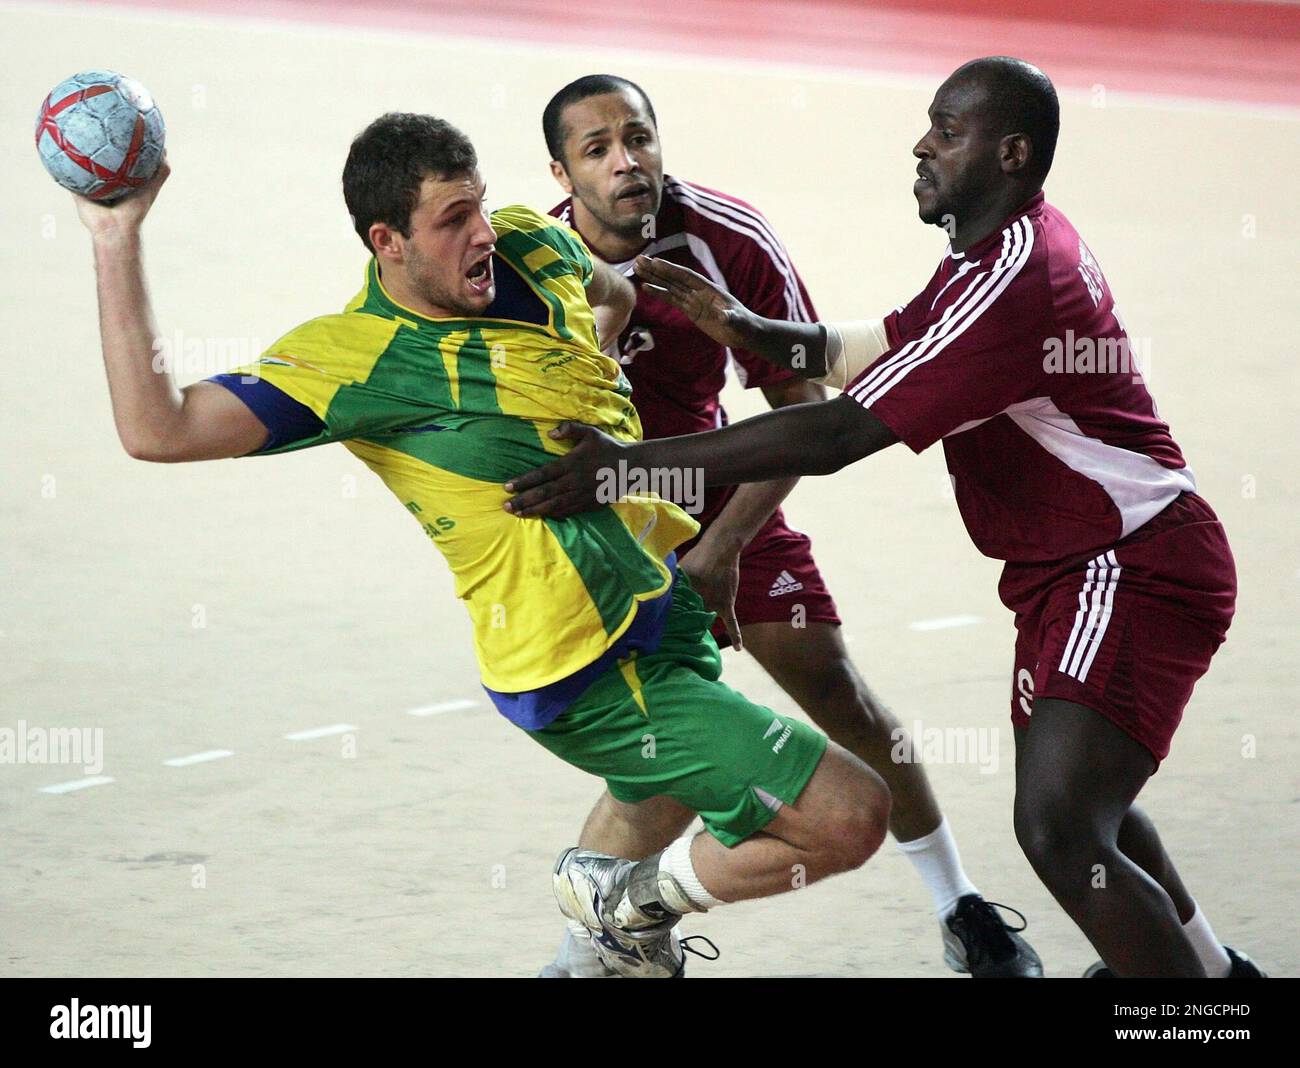 Brazil handball player Danilo Paulino da Silva, left, throws the ball  against Qatar's handball players Ahmed Saad Al Saad, center, and his  compatriot Borhan Saleh Al Turki during the group D match